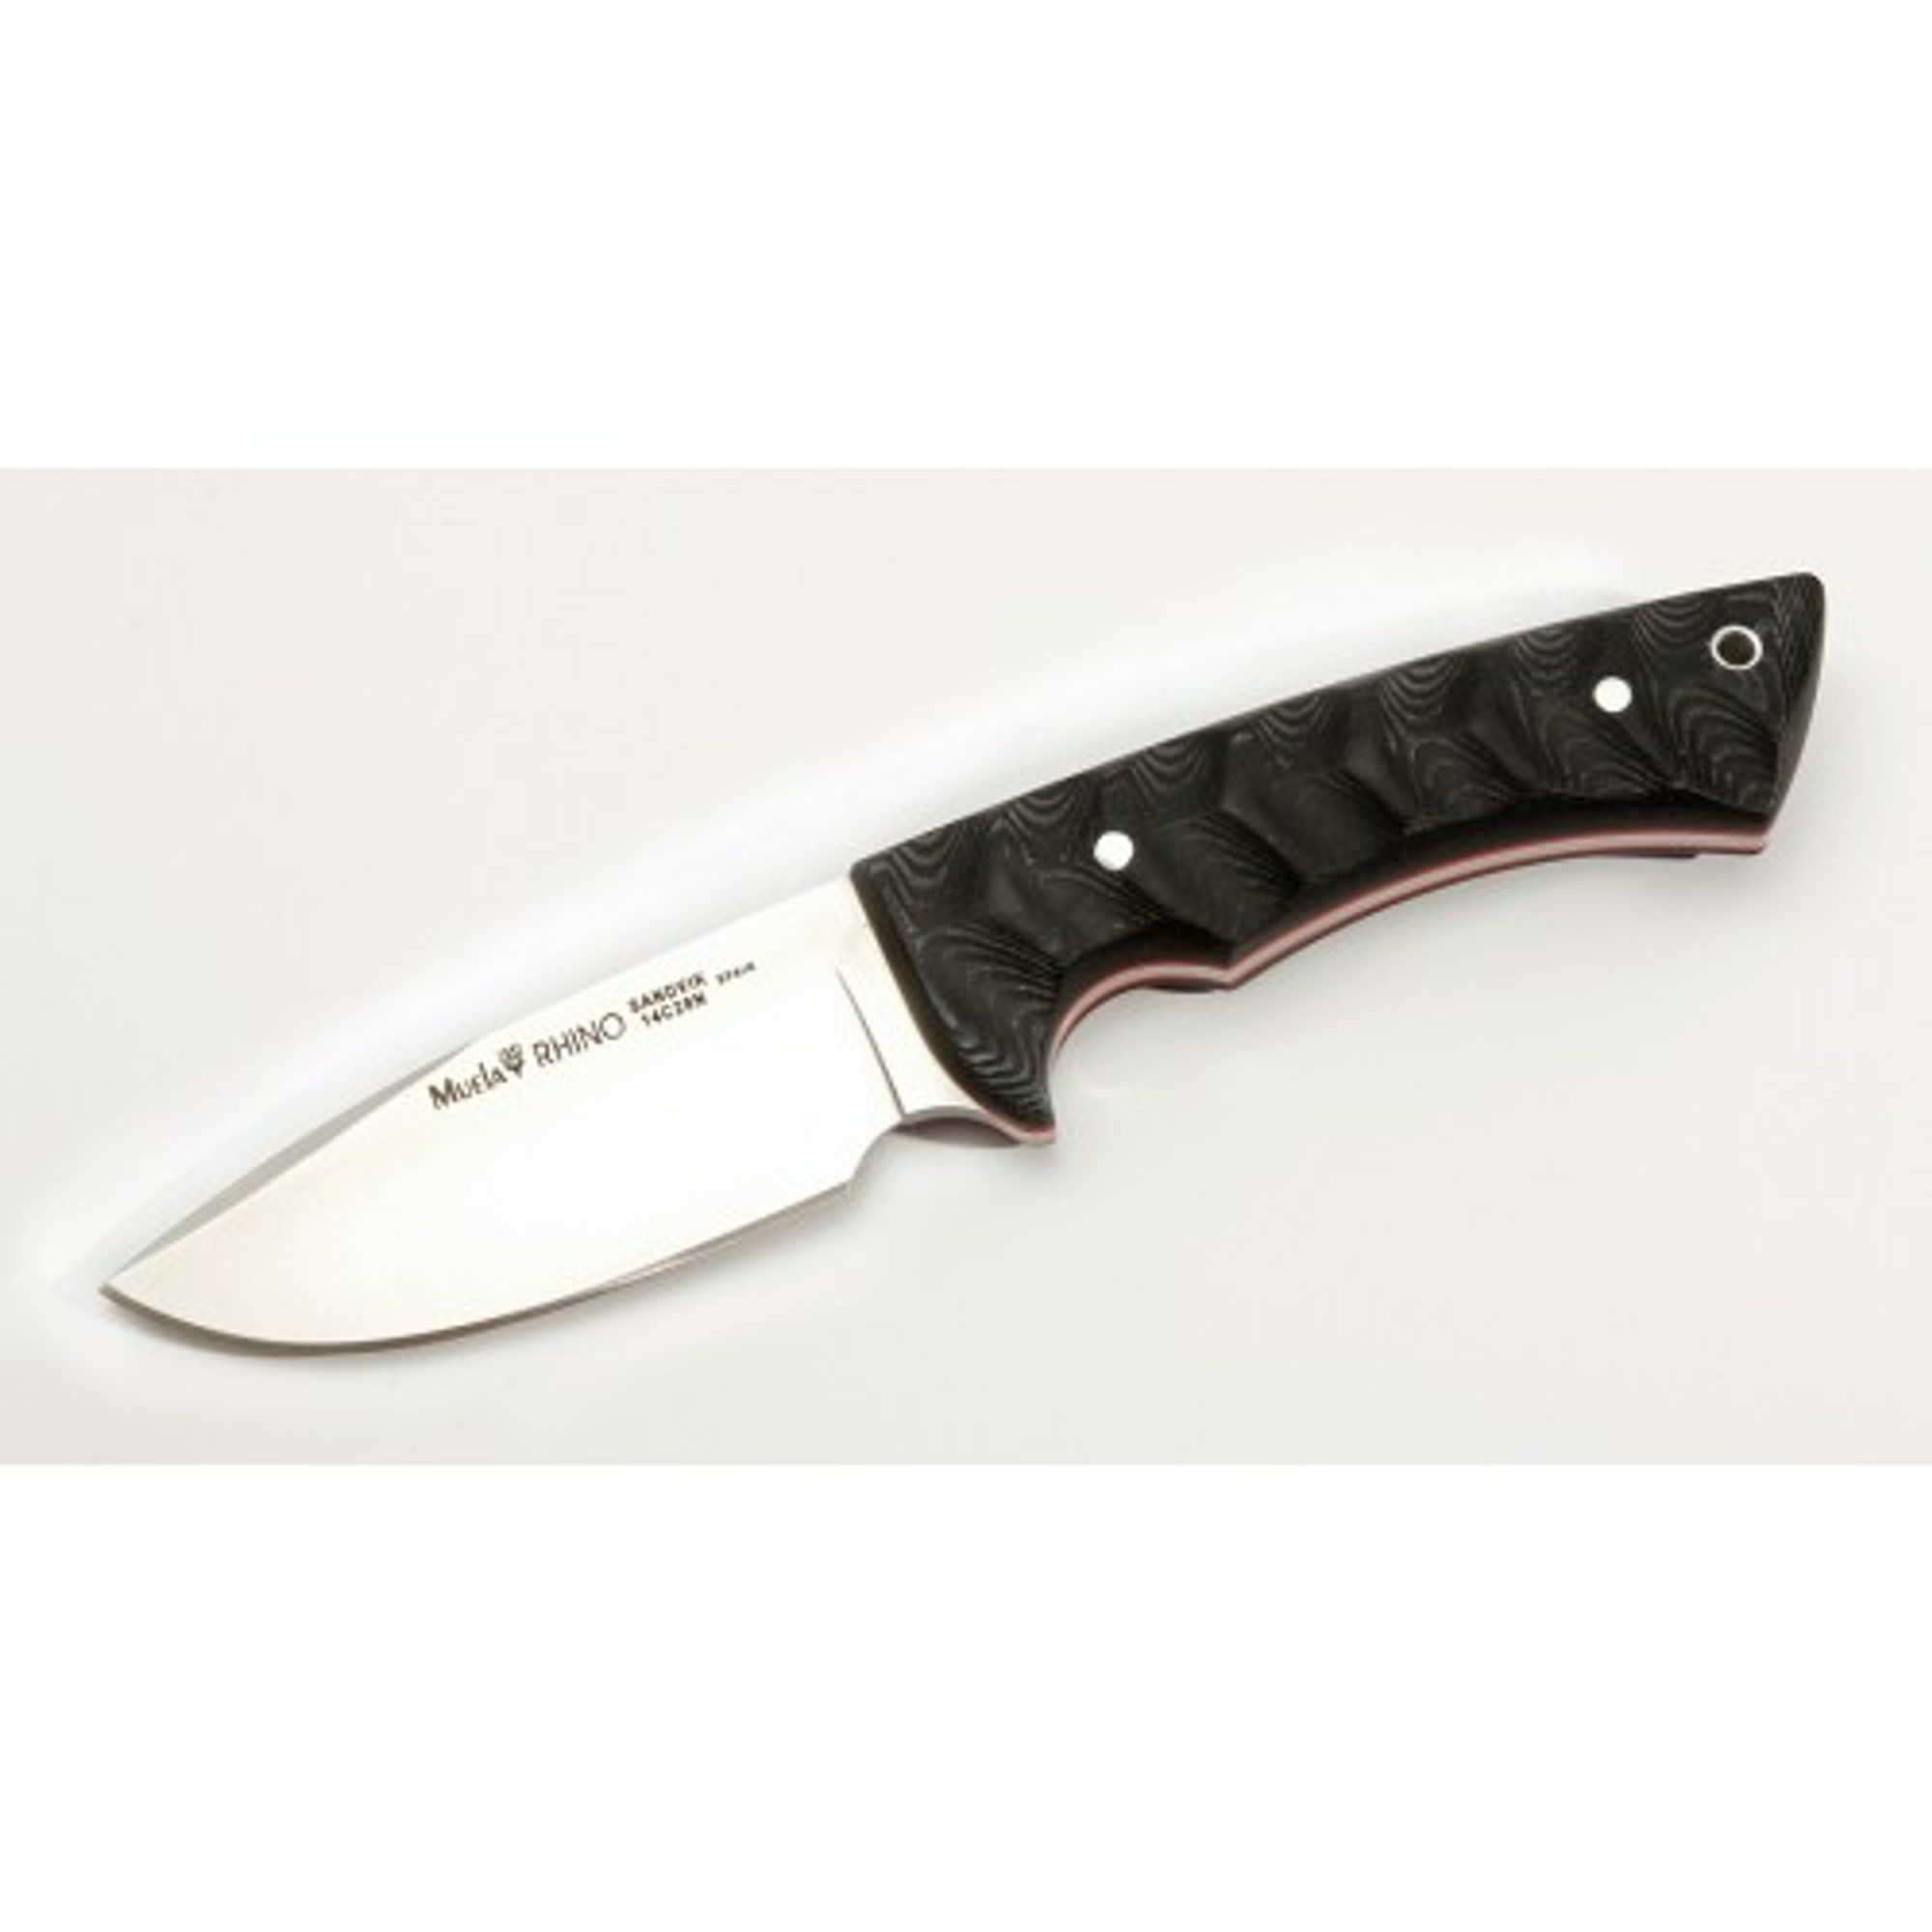 MUELA RHINO-10SV.M, Sandvik 14C28N, 4" Fixed Blade Hunting Knife, Black Micarta Handle